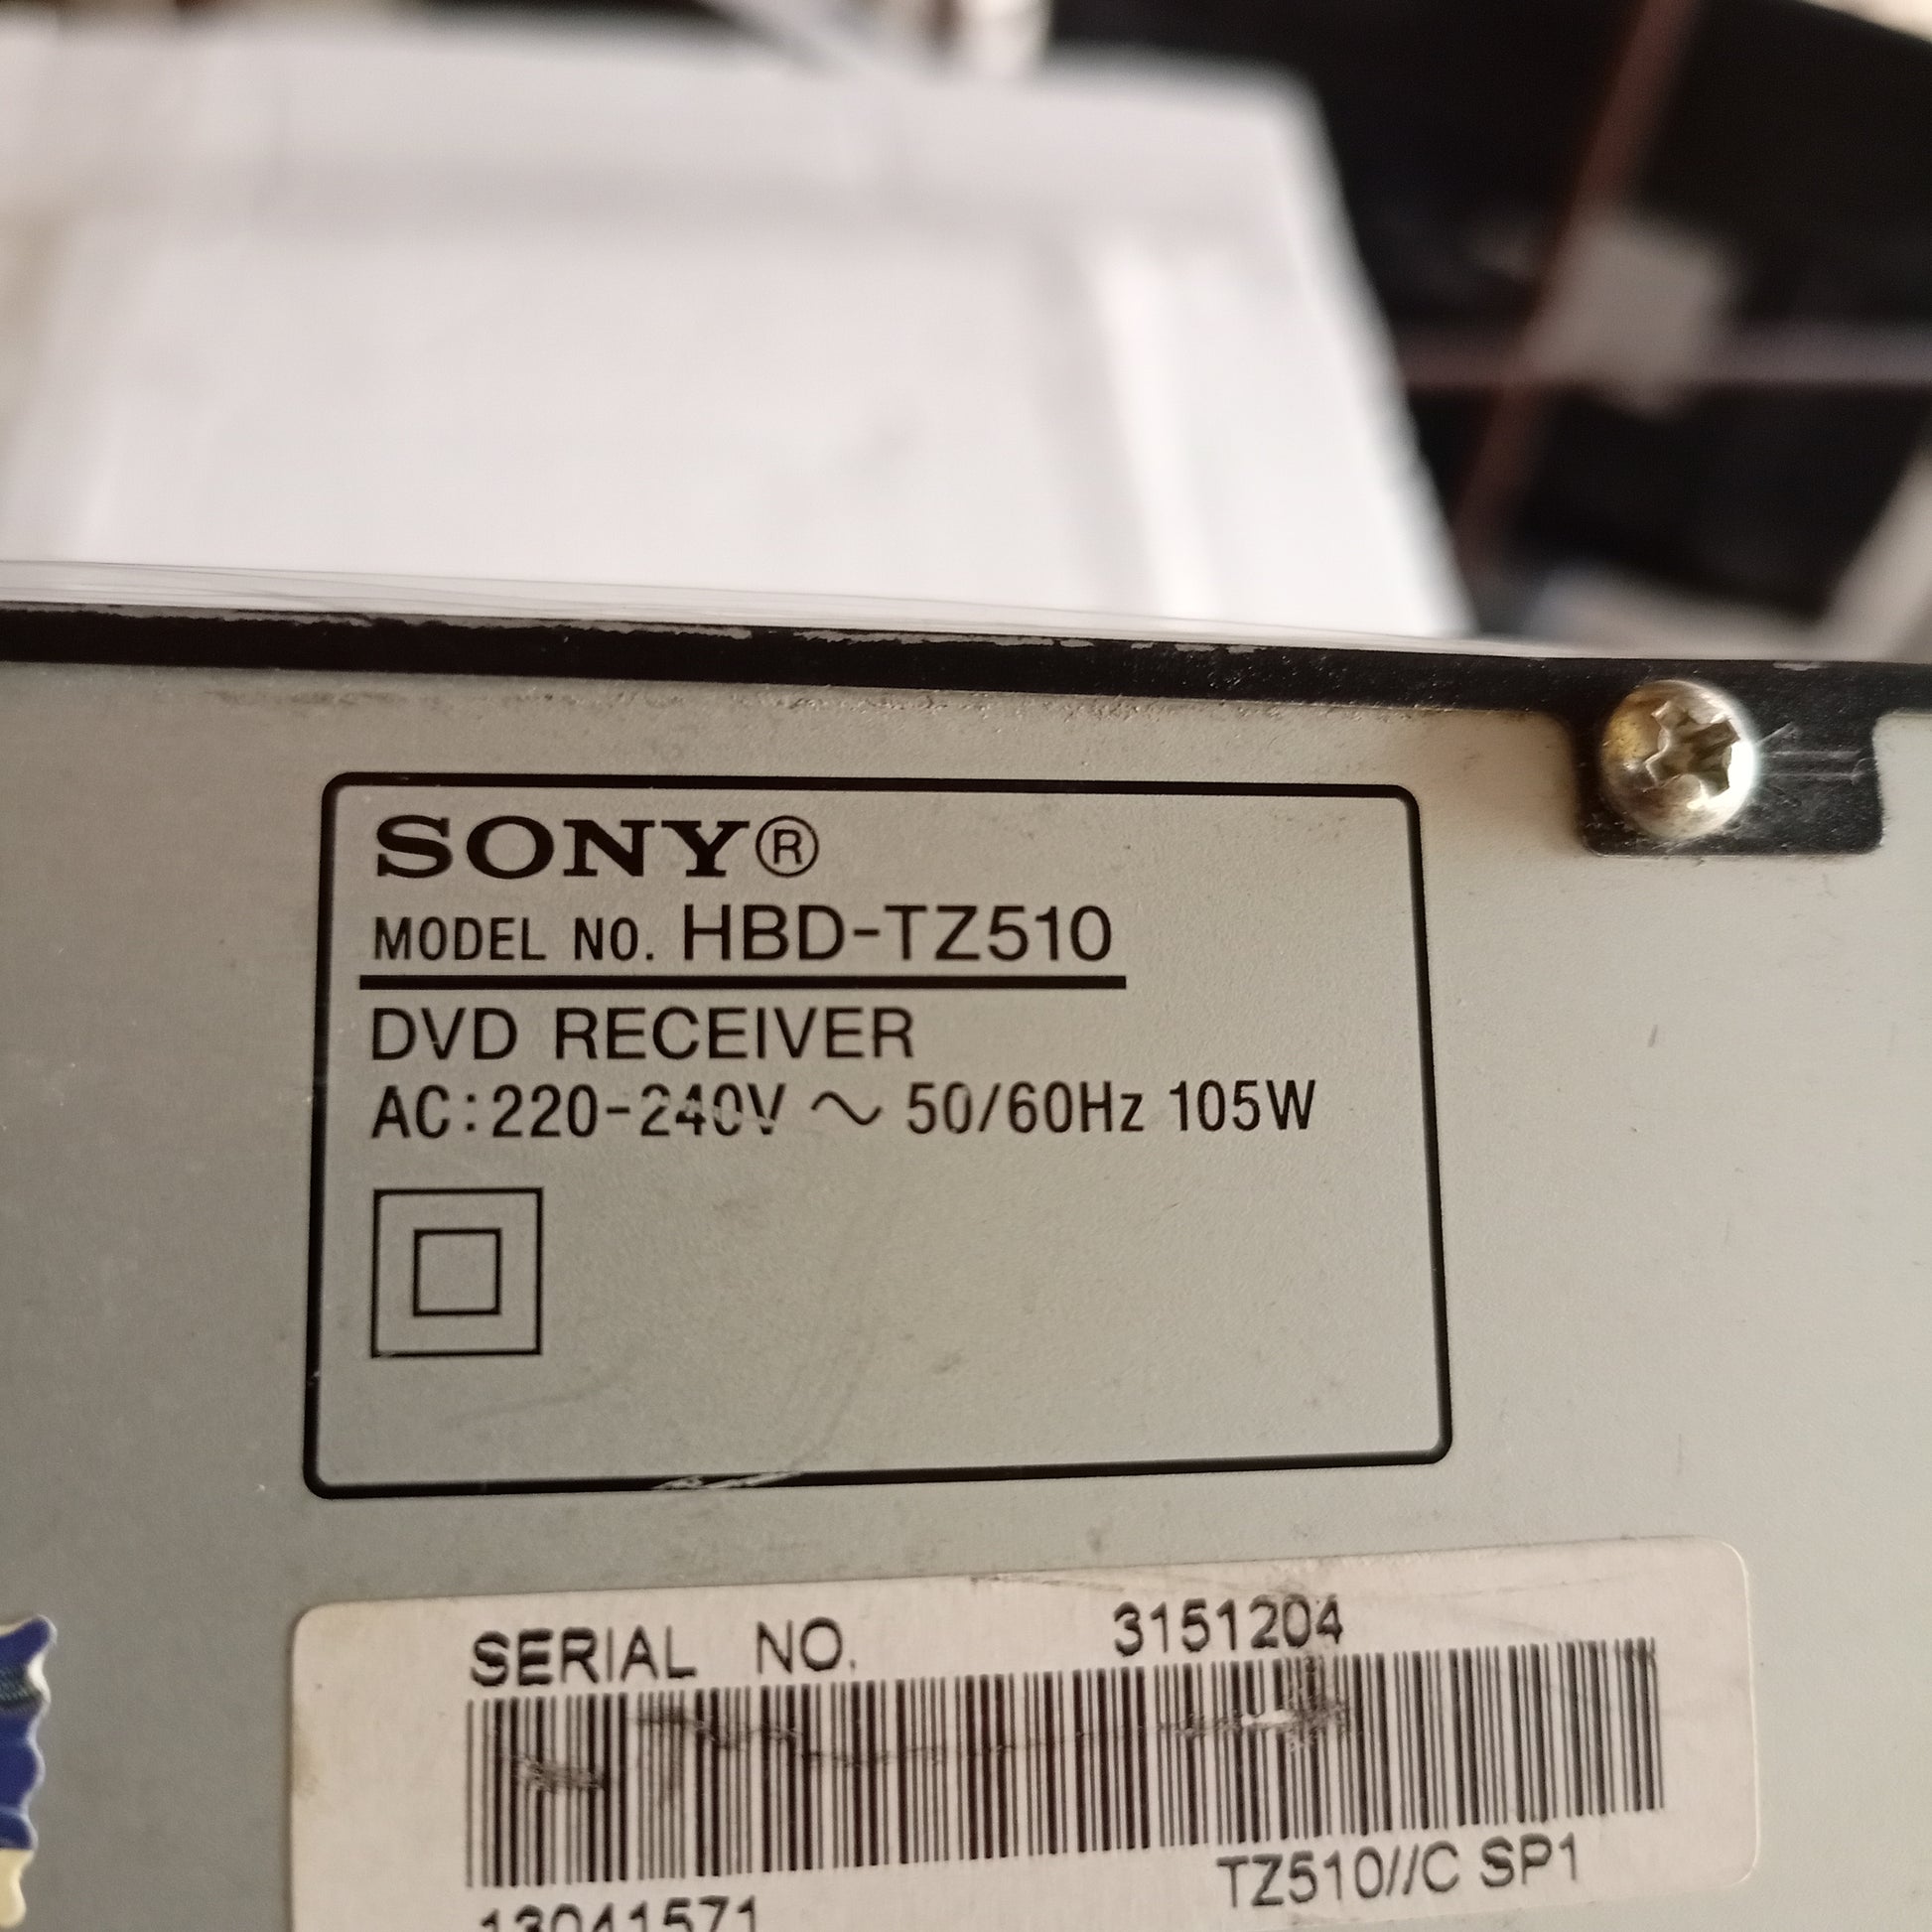 Sony HBD-TZ510 5.1Ch 600 Watts DVD Home Theater Machine Head - Model number sticker